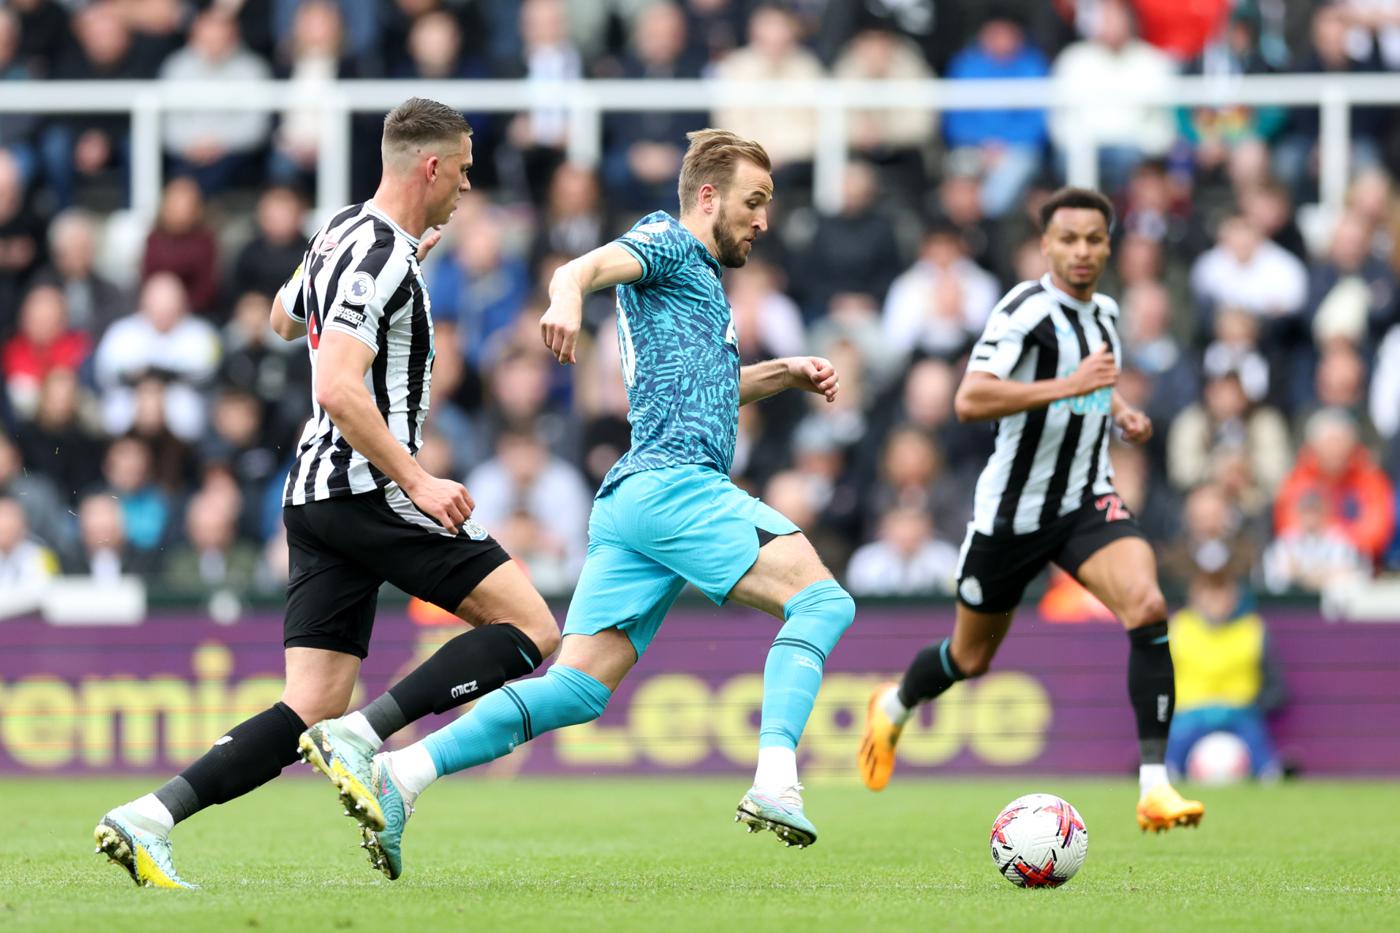 Newcastle v Tottenham - 6:1. English Championship, round of 32. Match Review, Statistics